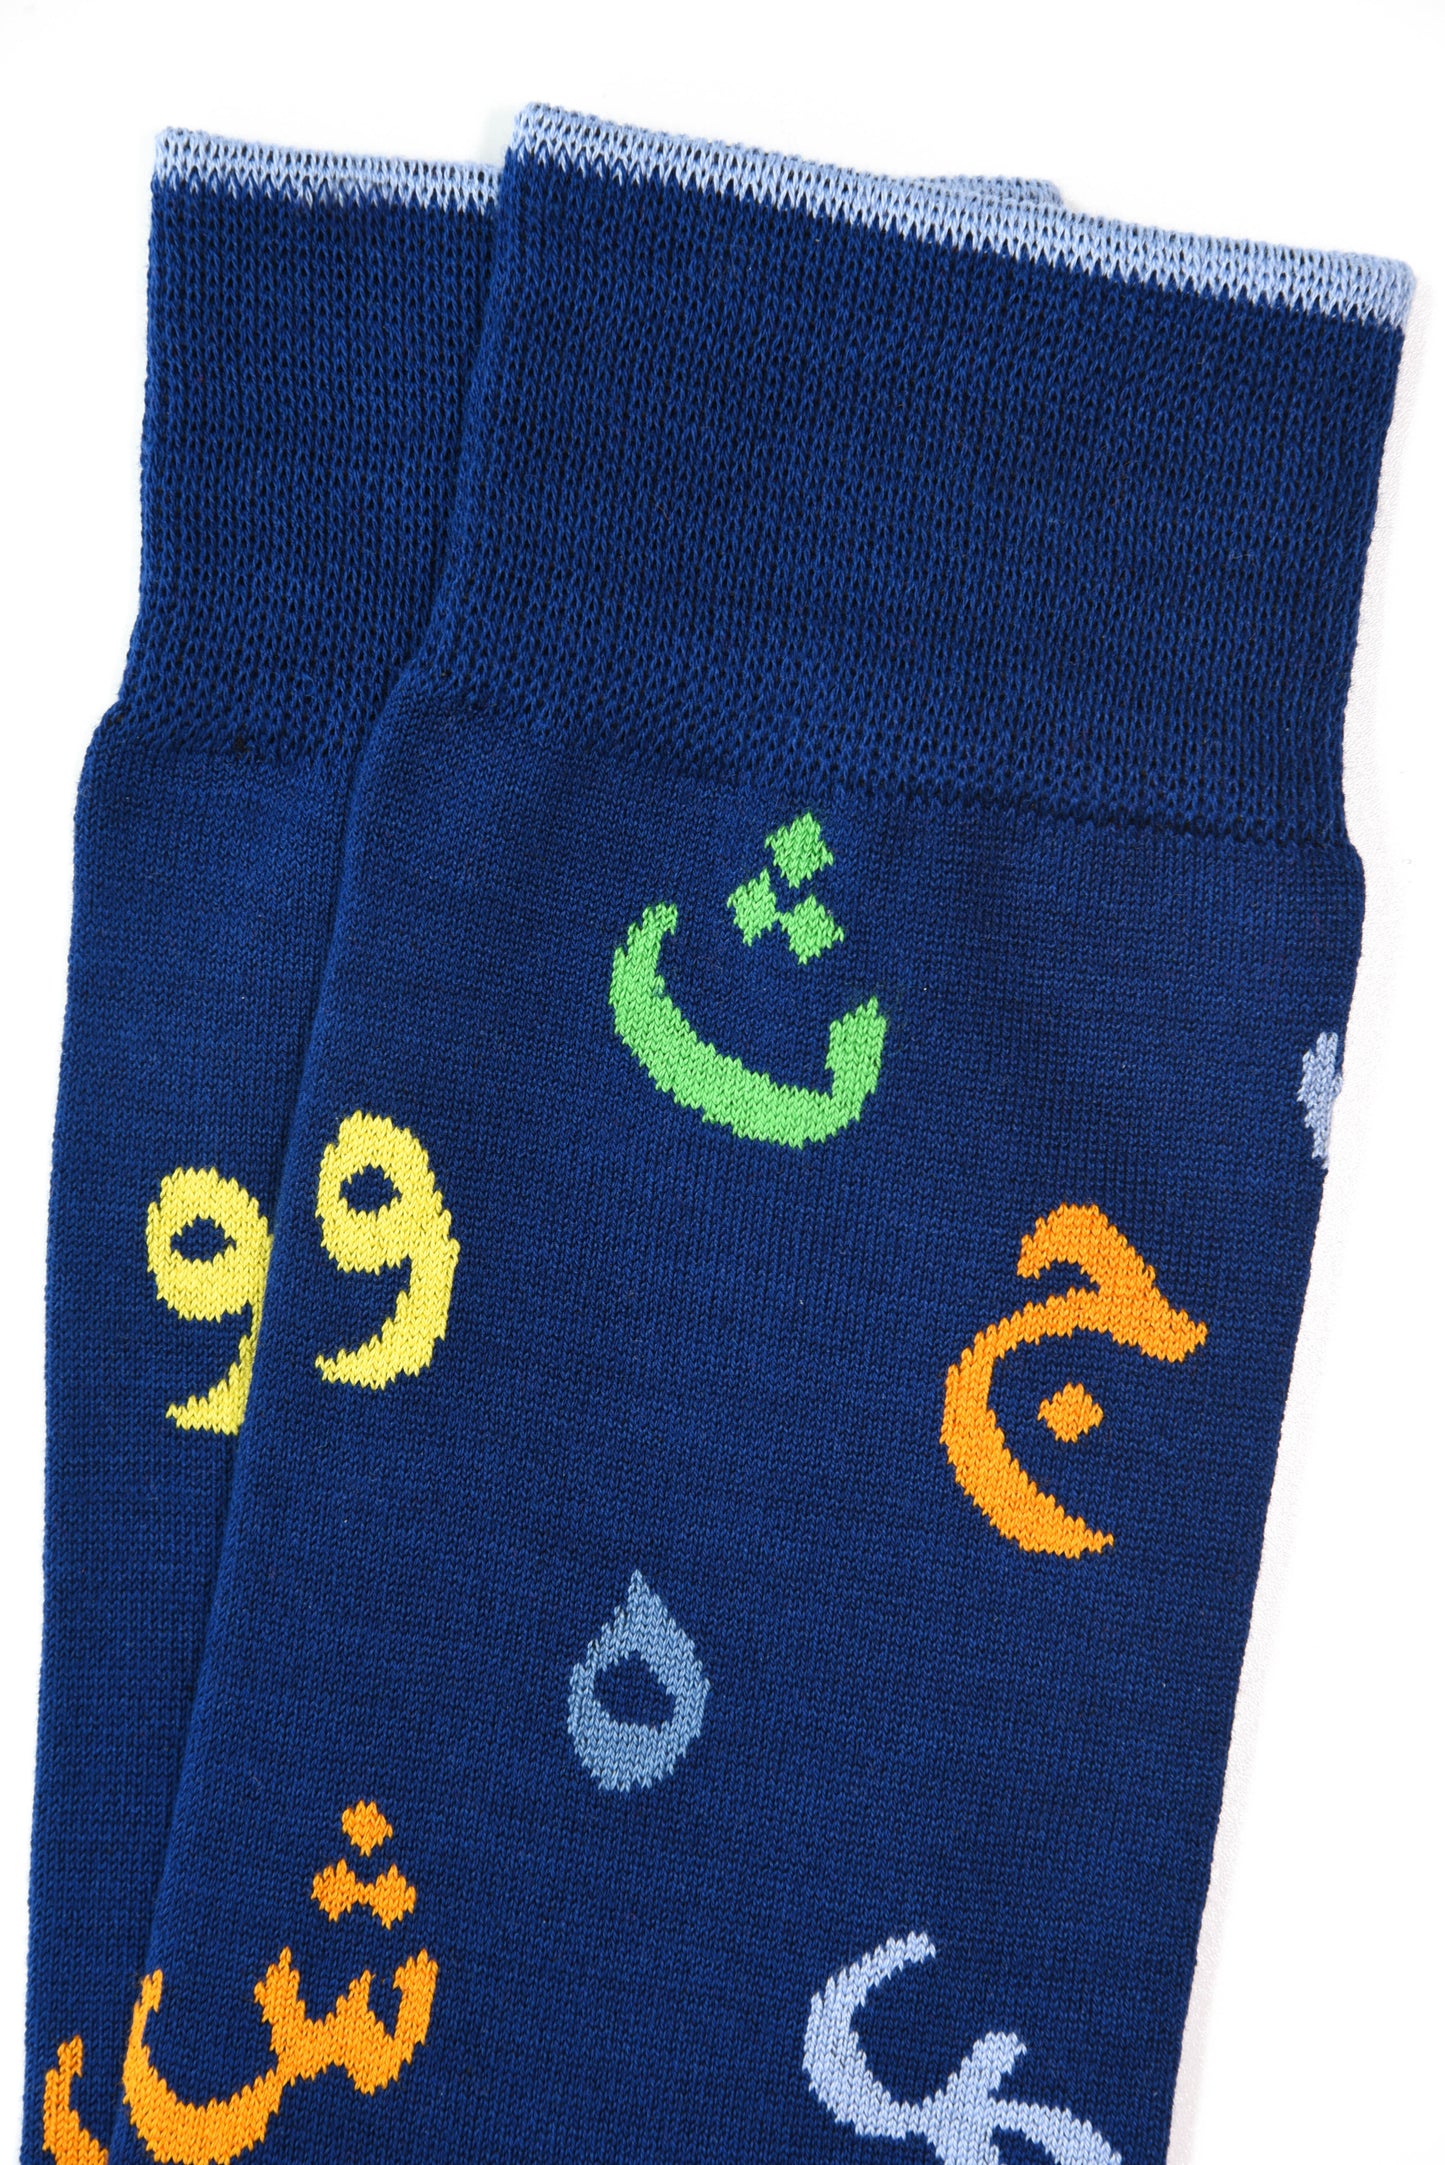 Alphabets Mercerized Mid-Calf Socks